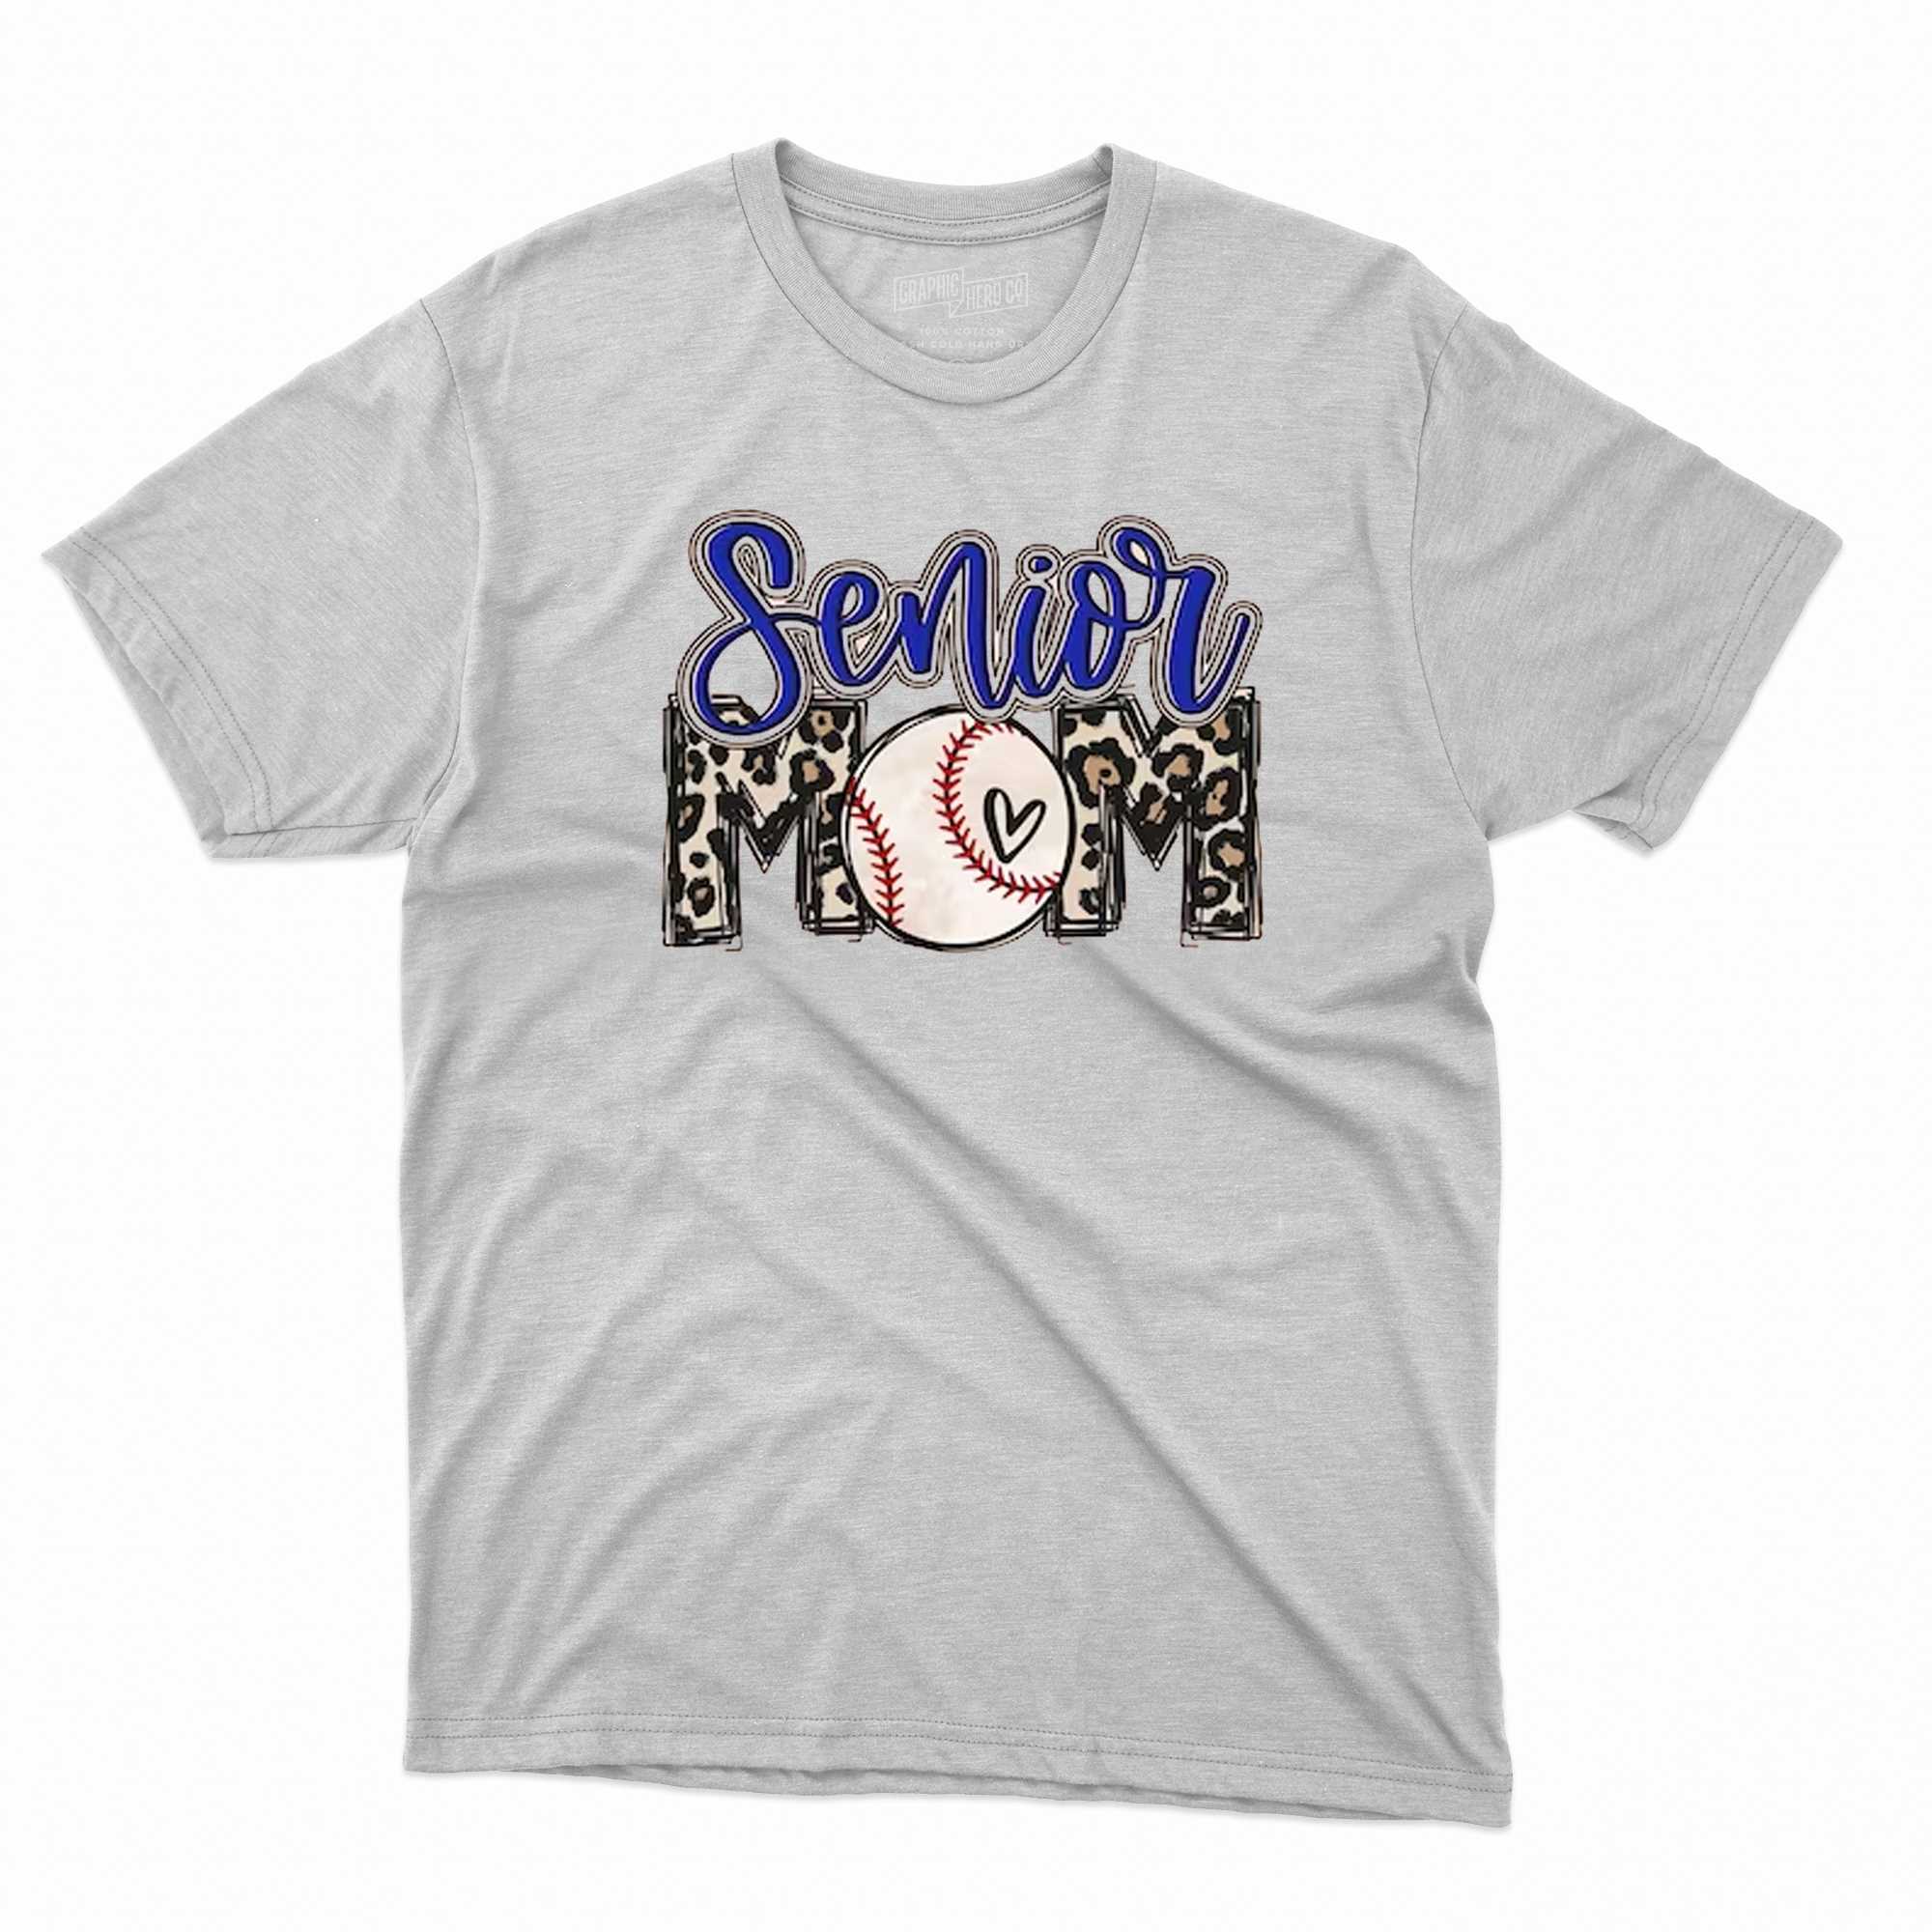 Senior Baseball Mom Senior Sports Shirt - Shibtee Clothing